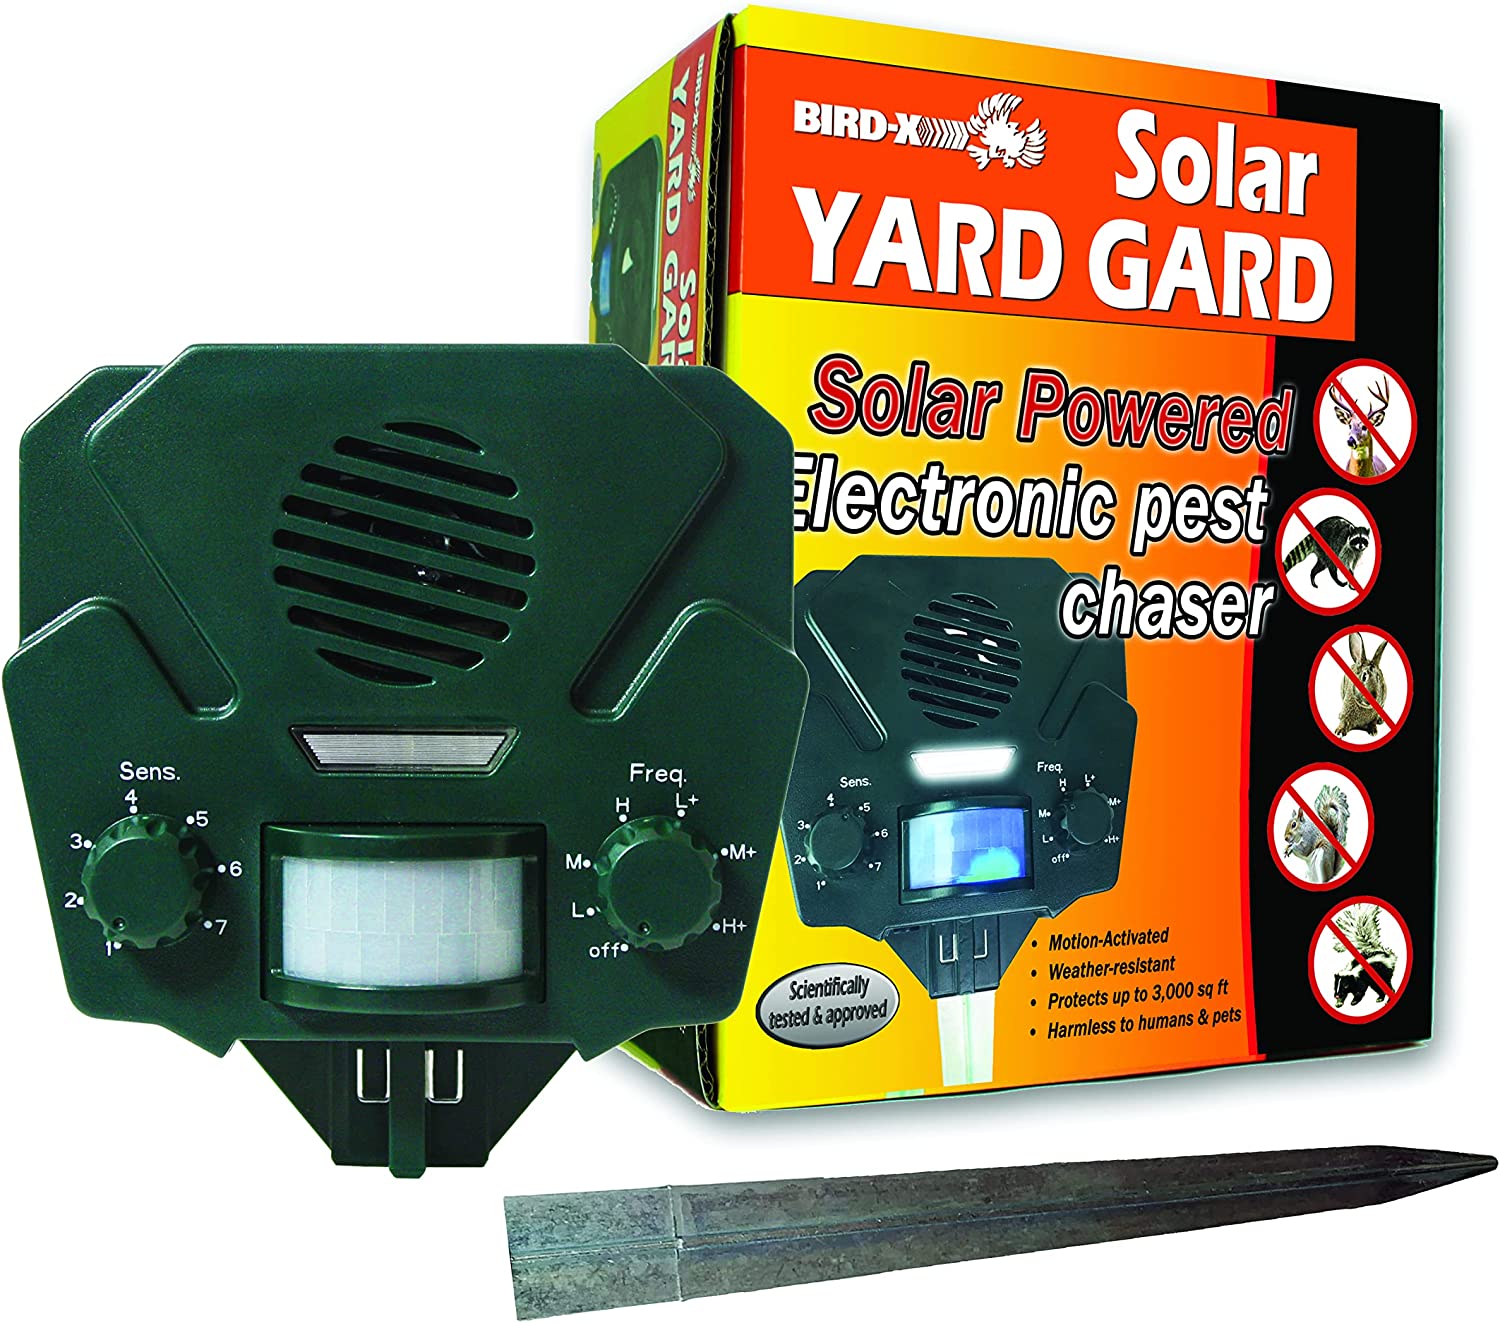 Review of Bird-X Solar Yard Gard Electronic Animal Repeller